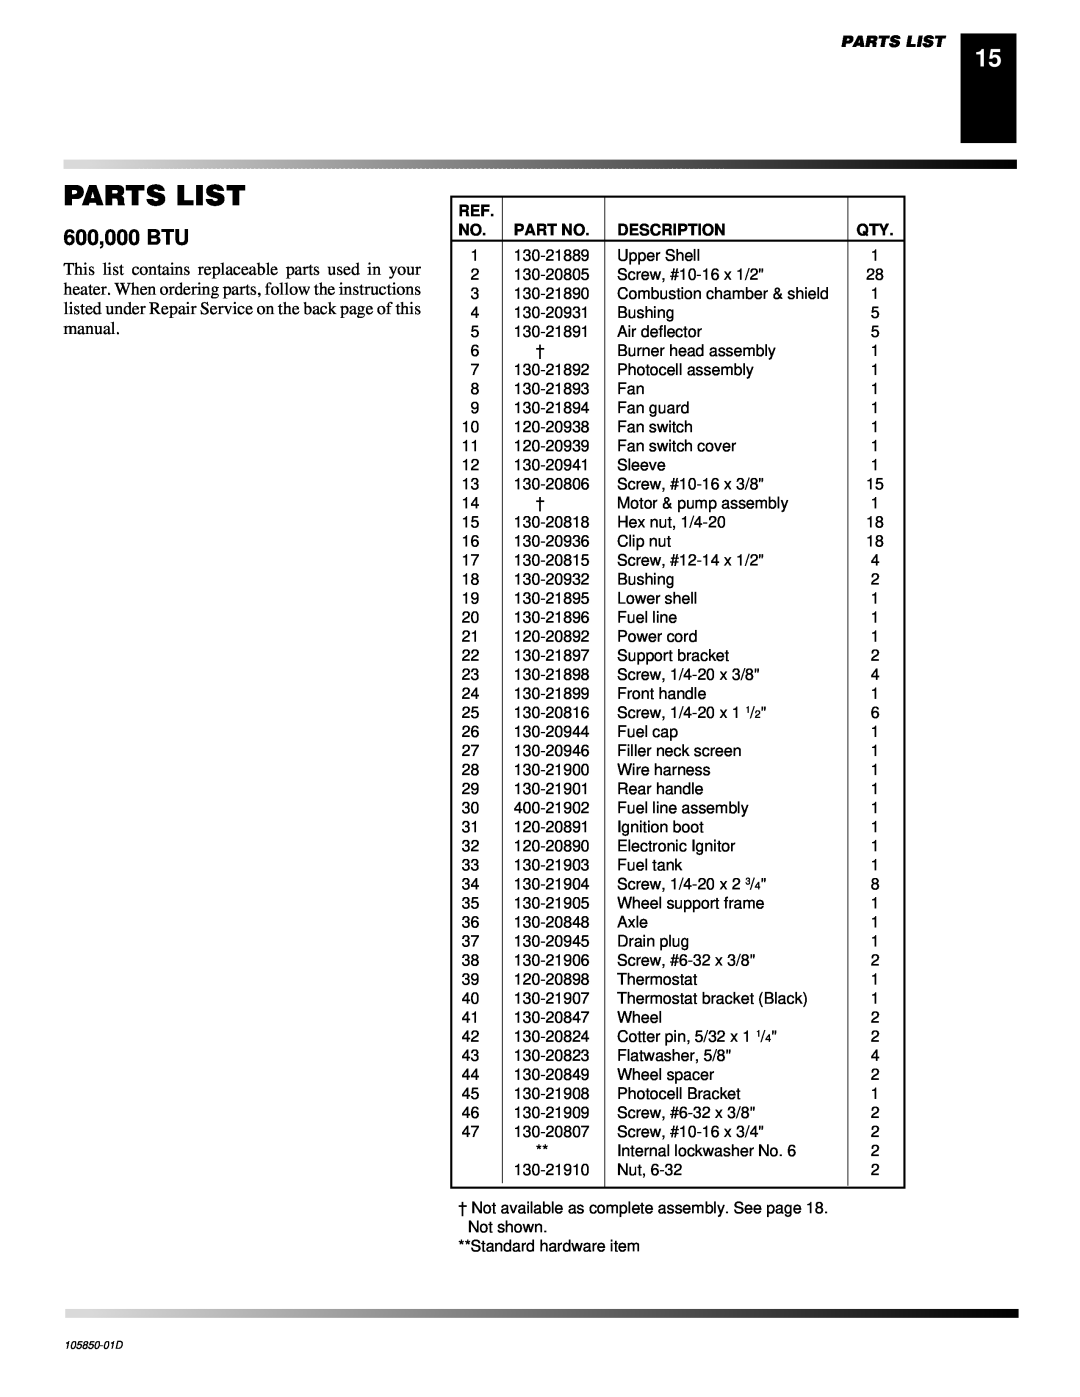 Desa CP350AK, CP600AK owner manual Parts List, 600,000 BTU, Description 